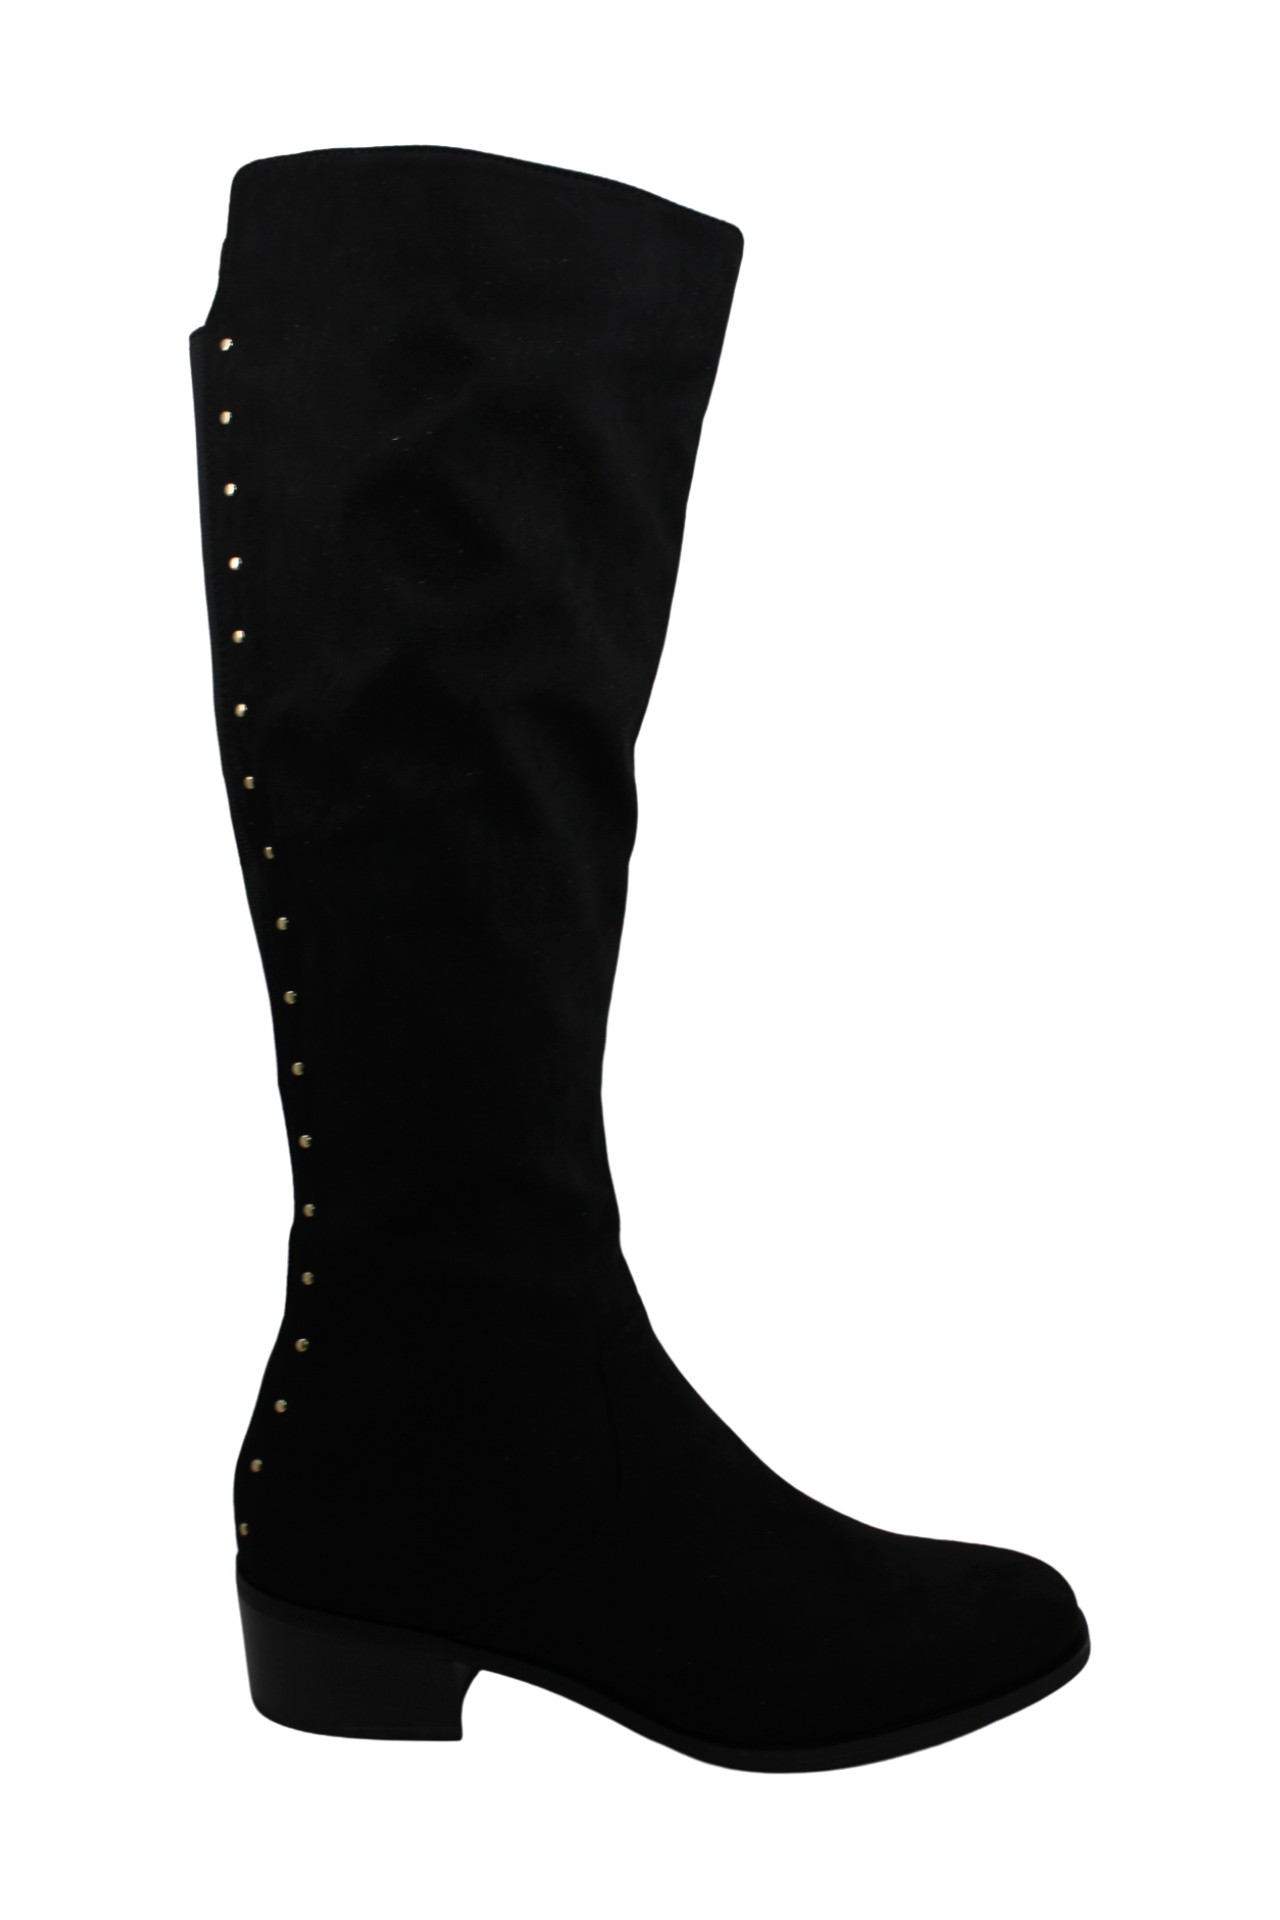 Bar III Womens Vayla Almond Toe Knee High Fashion Boots 